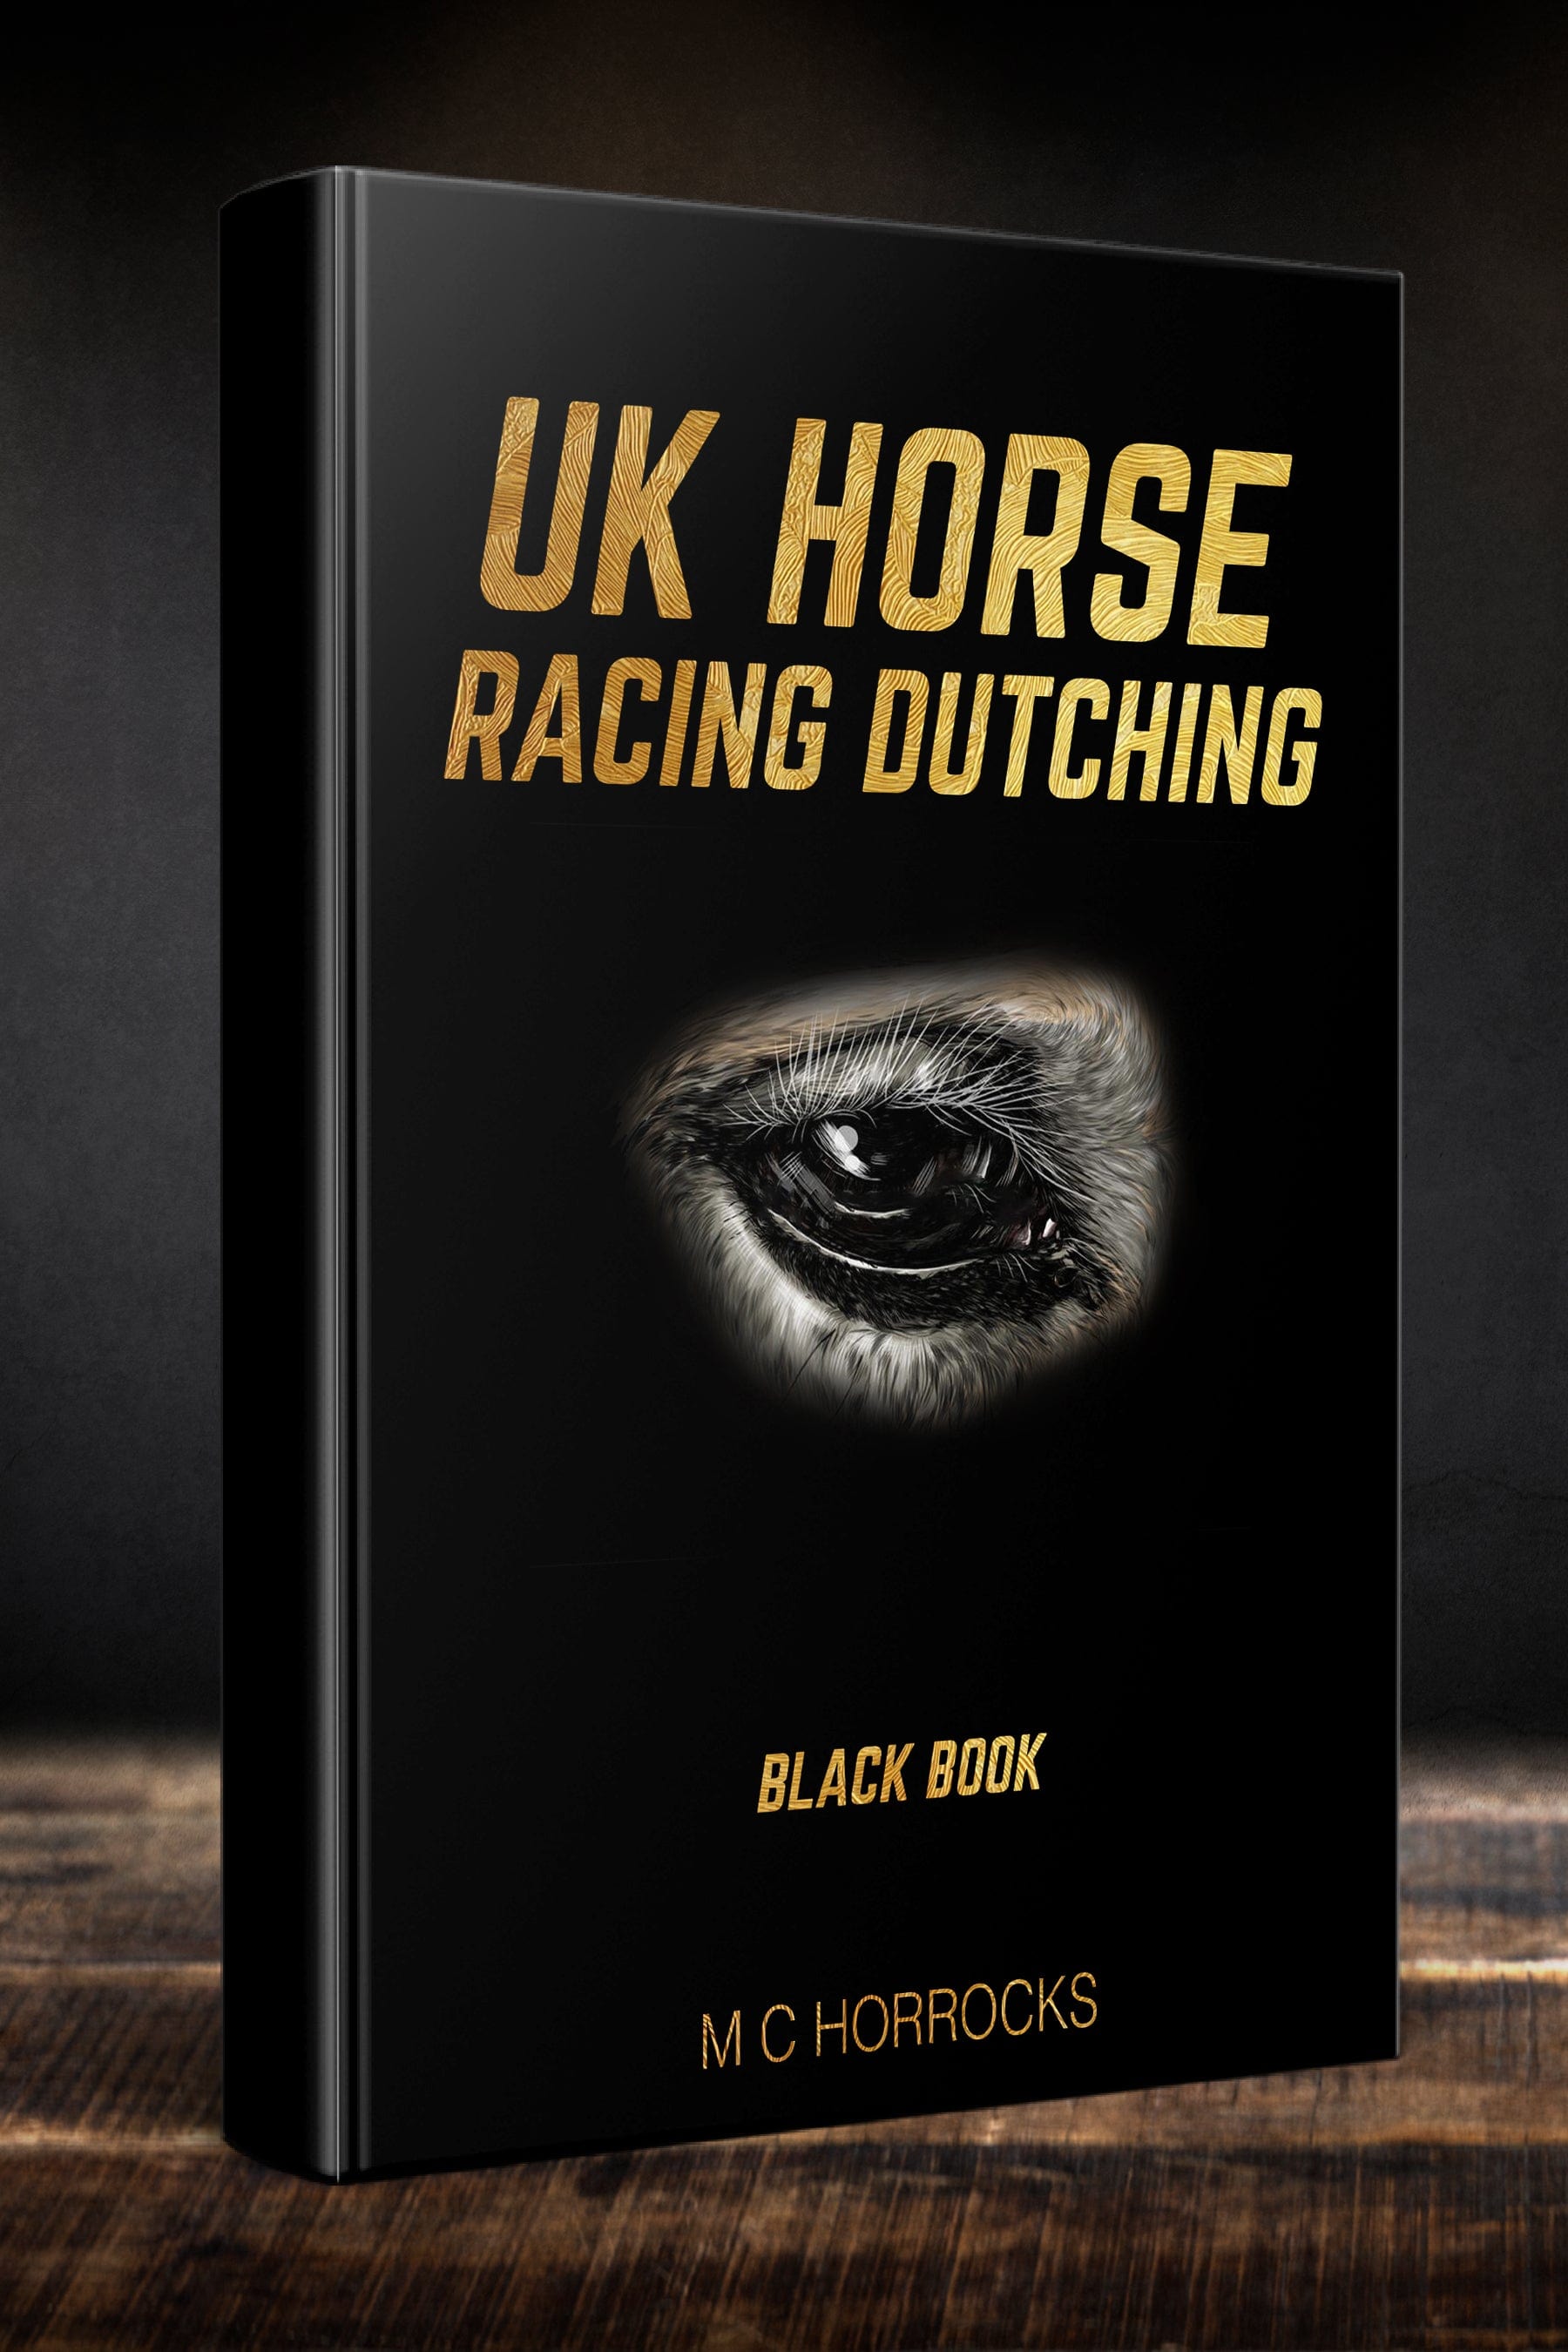 UK Horse Racing Dutching Black Book